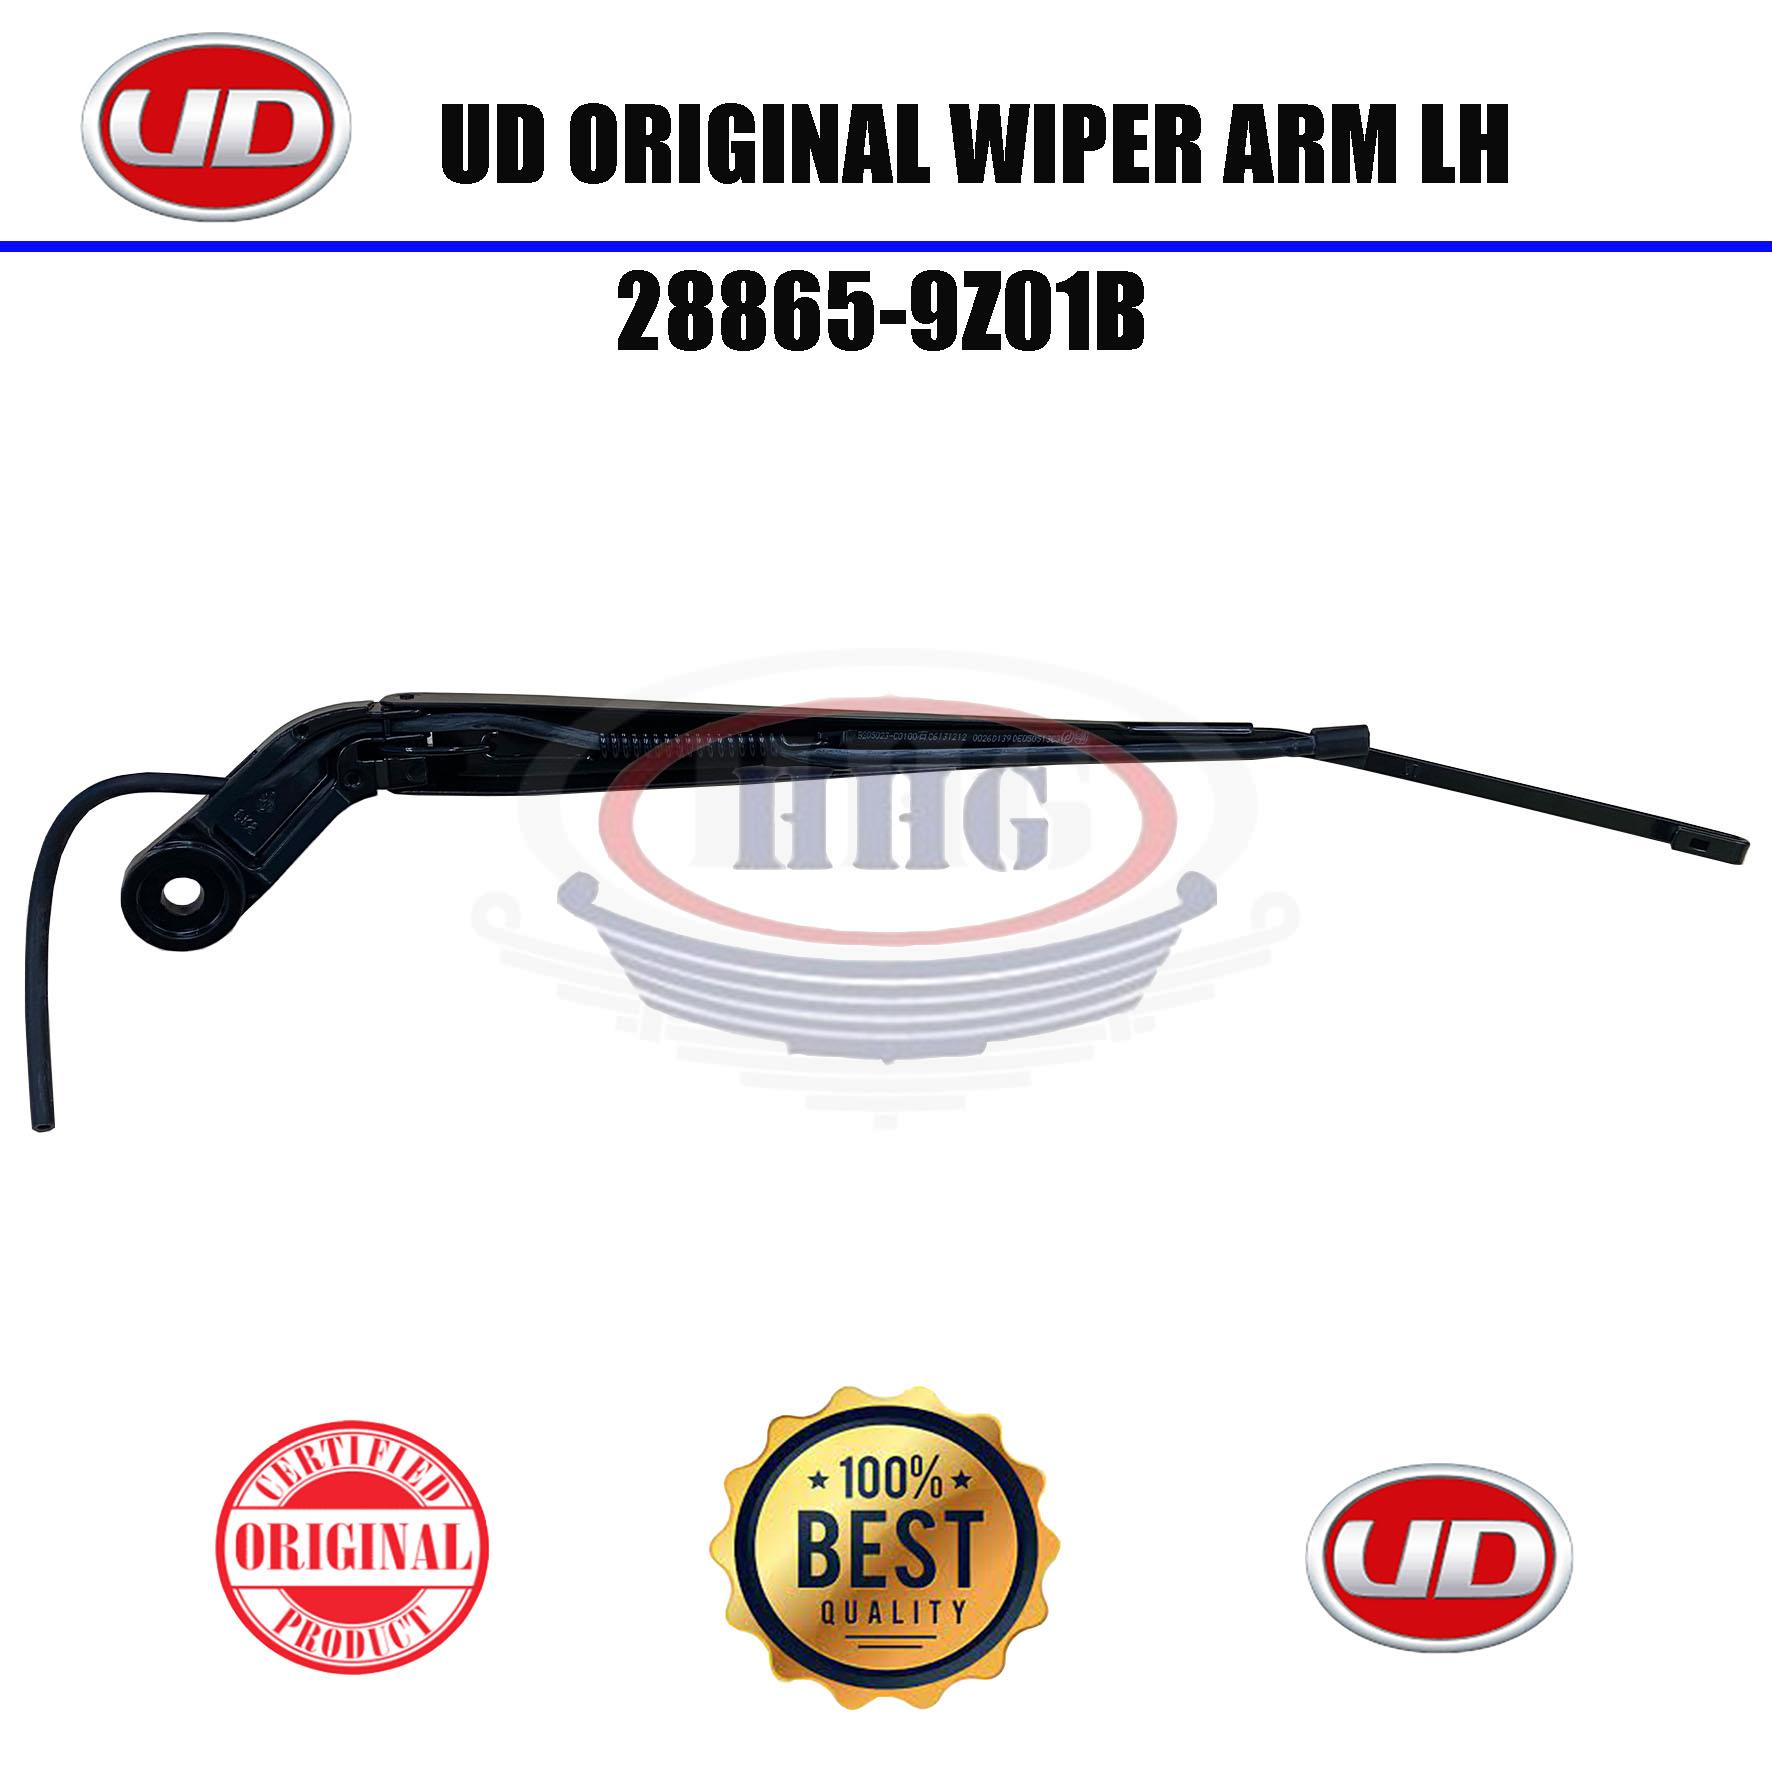 UD Original Quester Wiper Arm LH (28865-9Z01B)